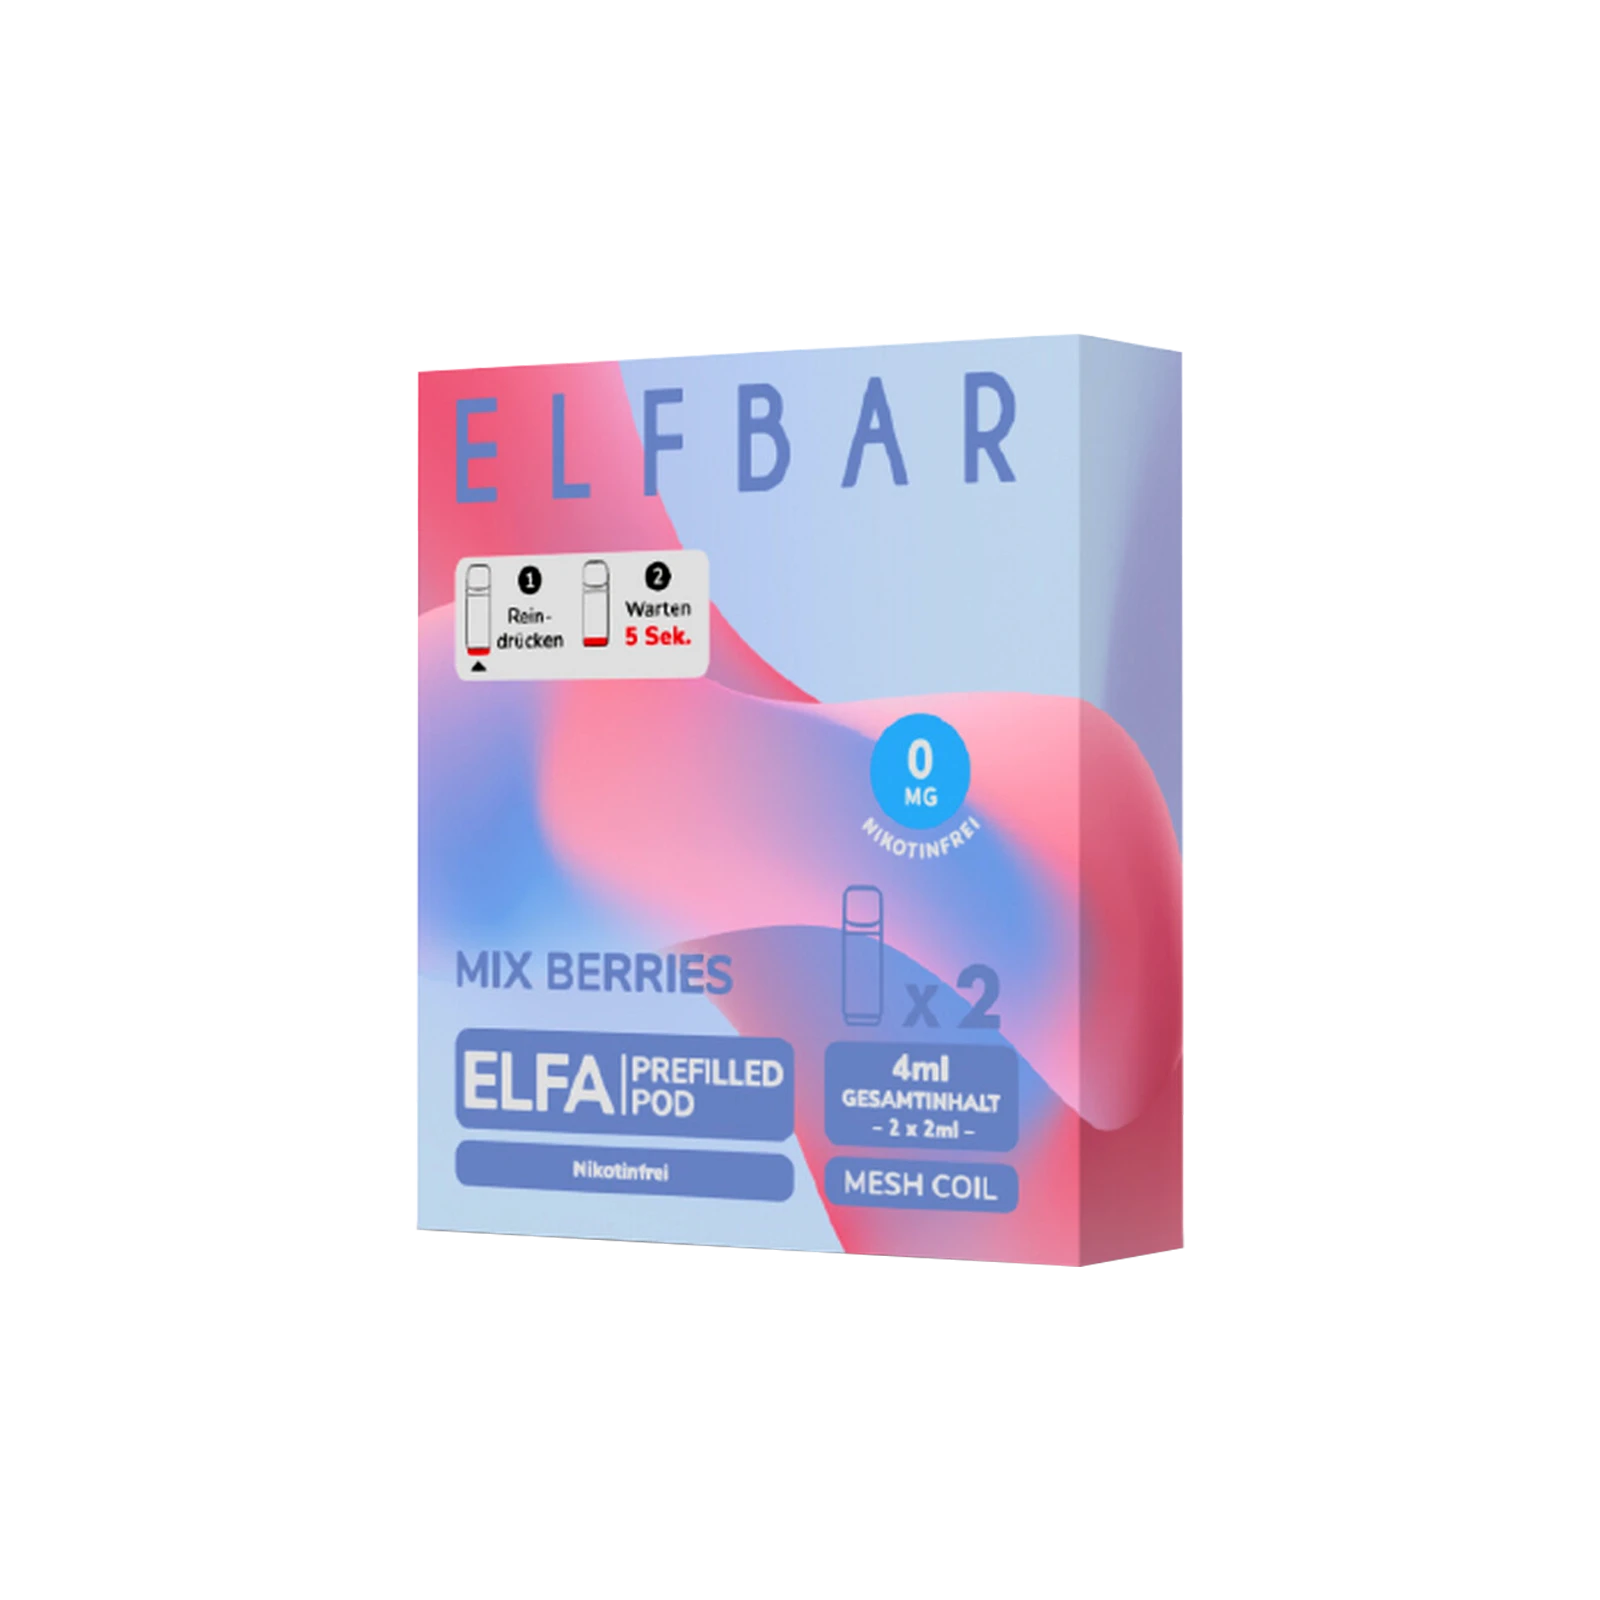 Elf Bar ELFA CP Mix Berries Nikotinfrei | Prefilled Pods günstig bestellen 1